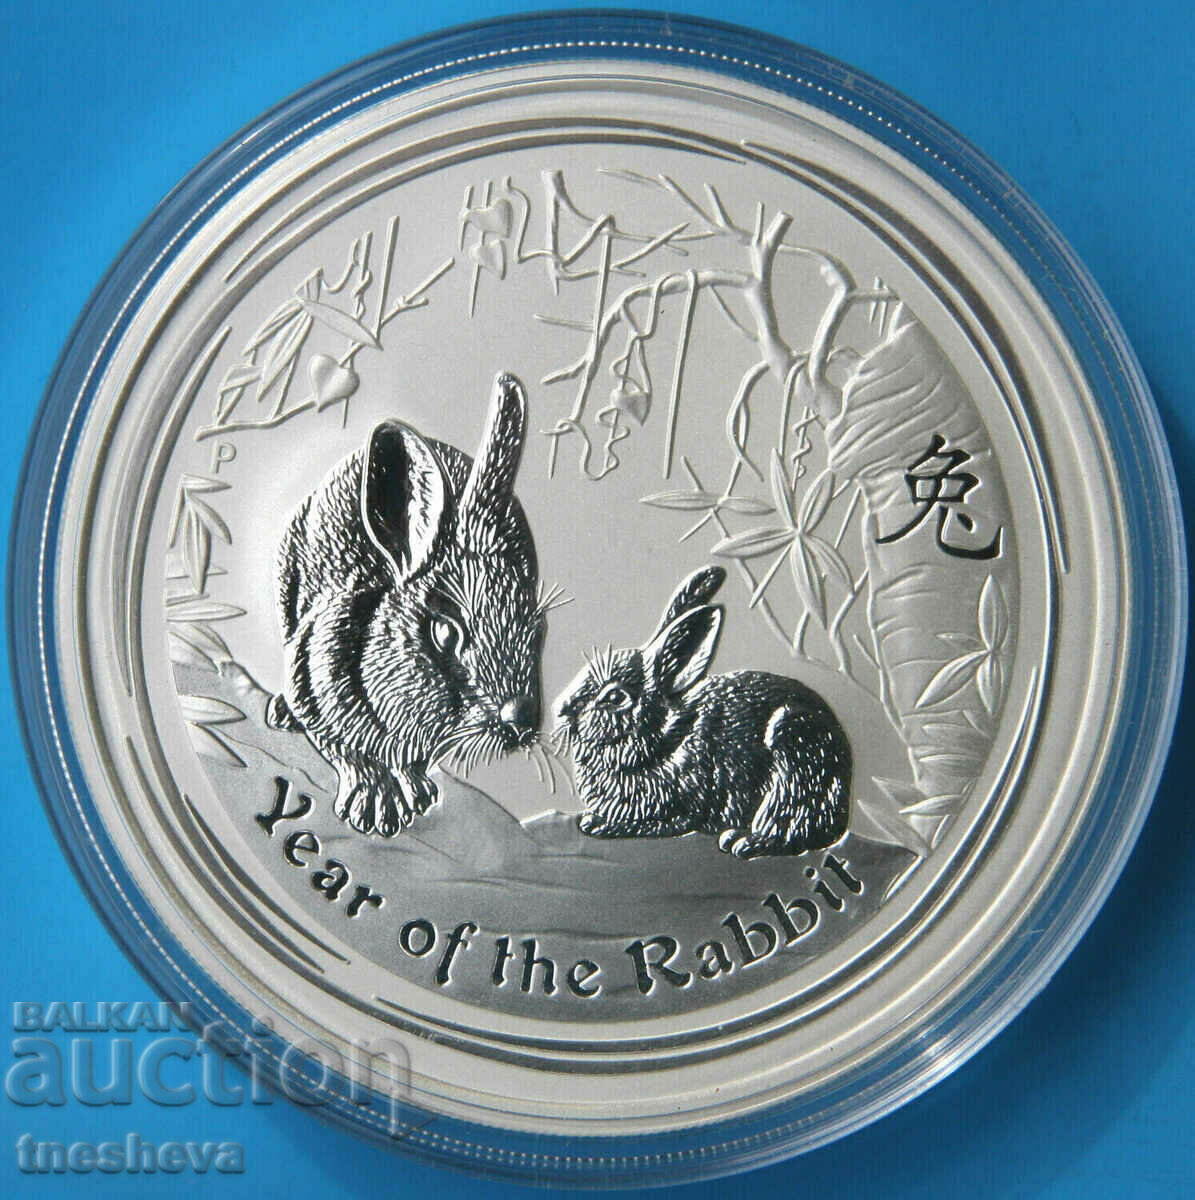 1 oz Lunar Year of the Rabbit 2011